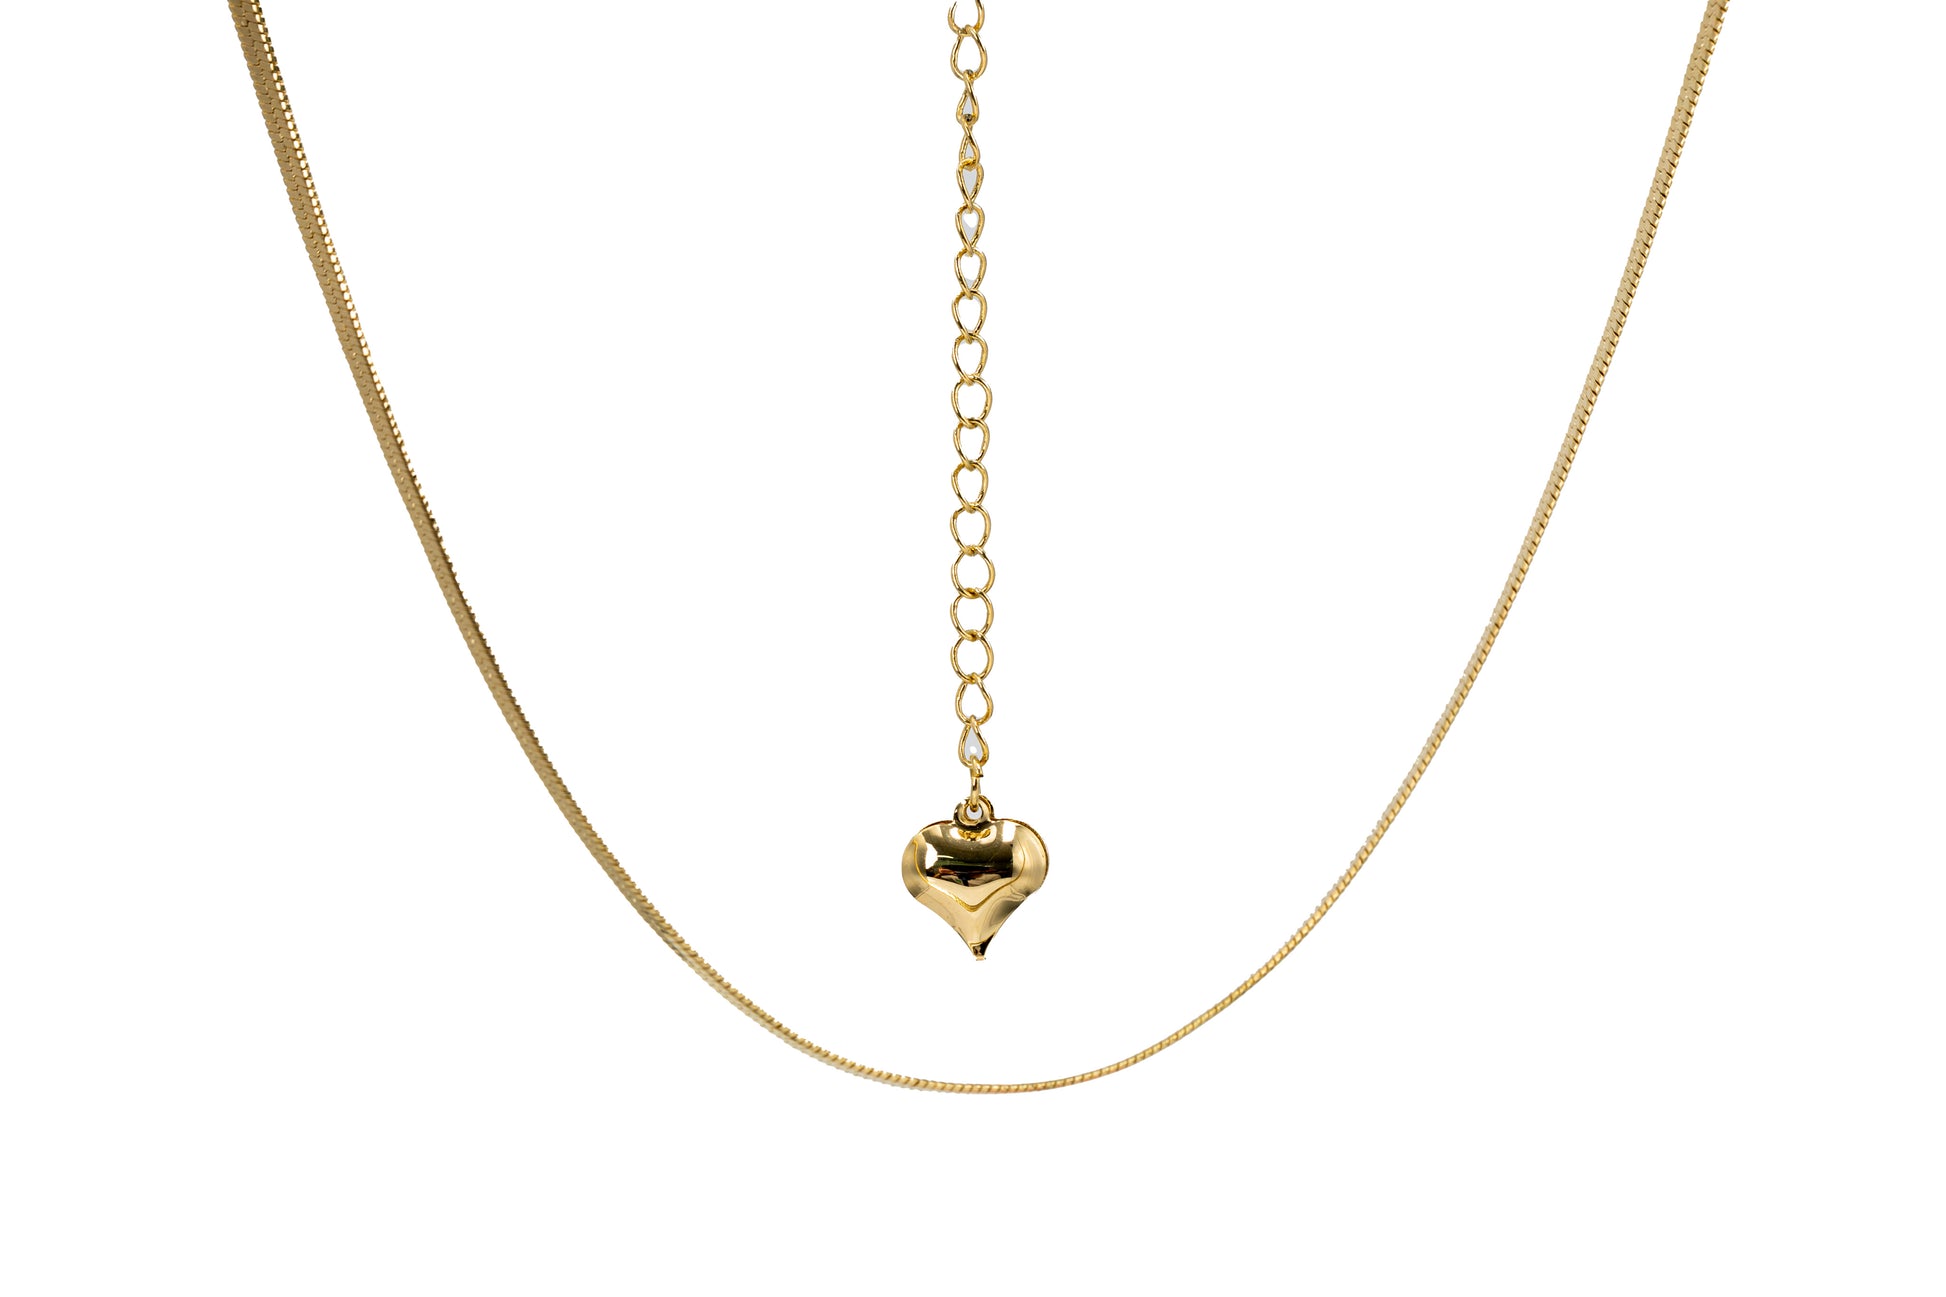 Golden Serpentine Necklace - Golden Necklace for Women